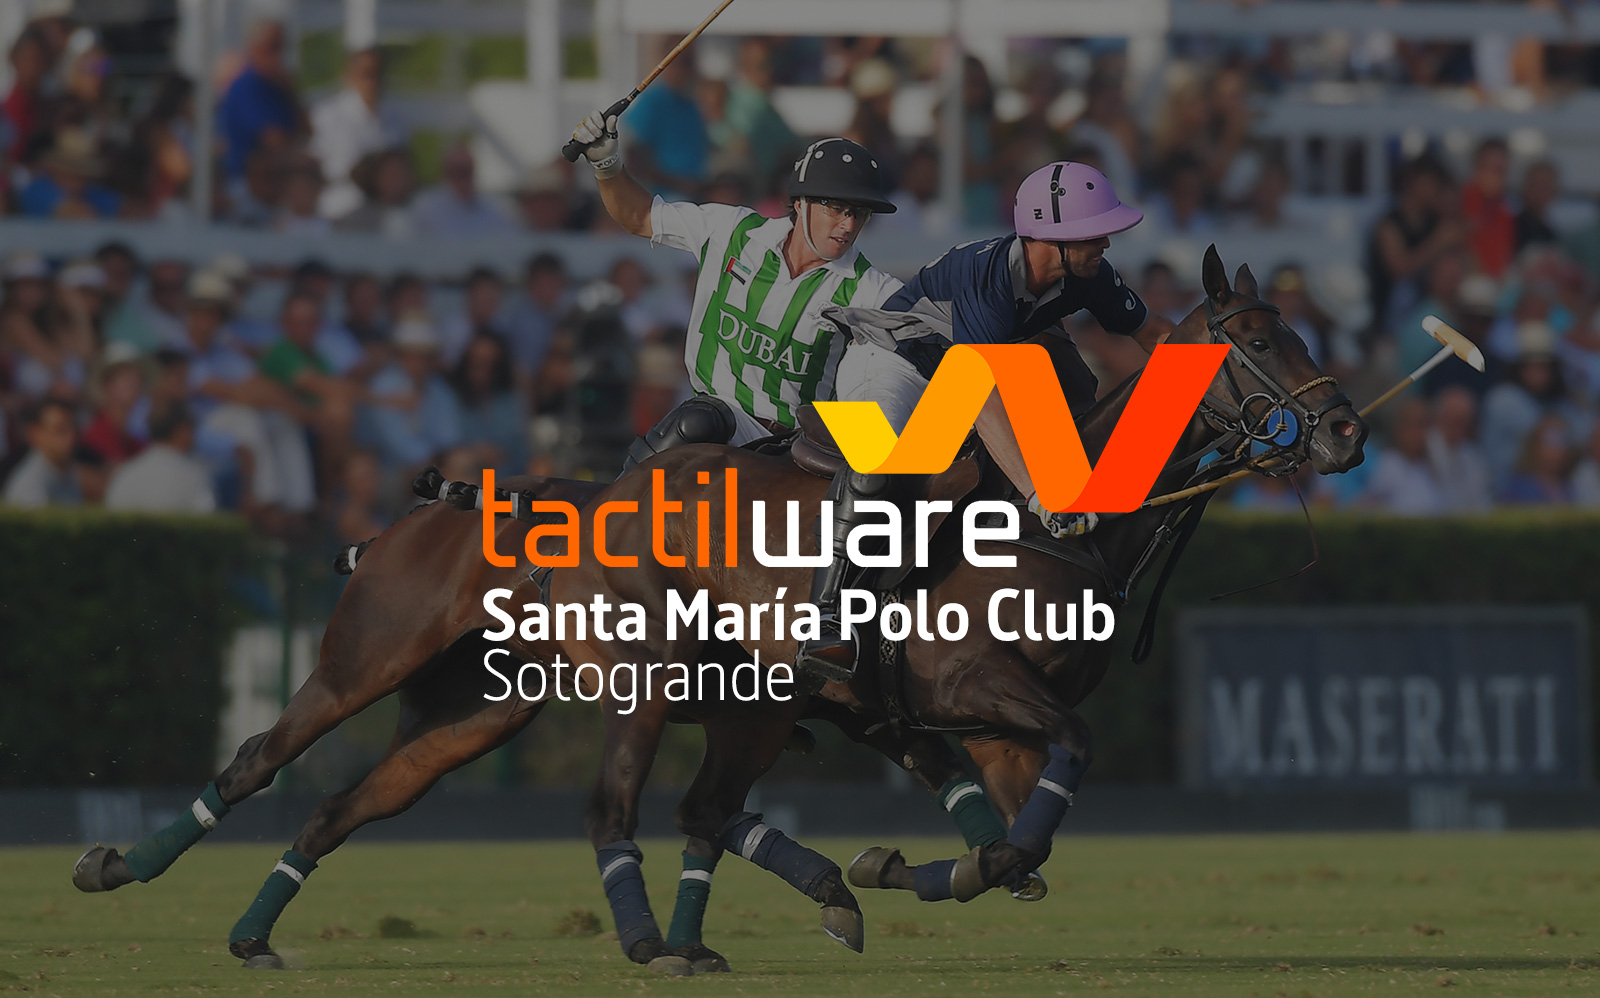 46º Torneo Internacional de Polo en Santa María Polo Club de Sotogrande